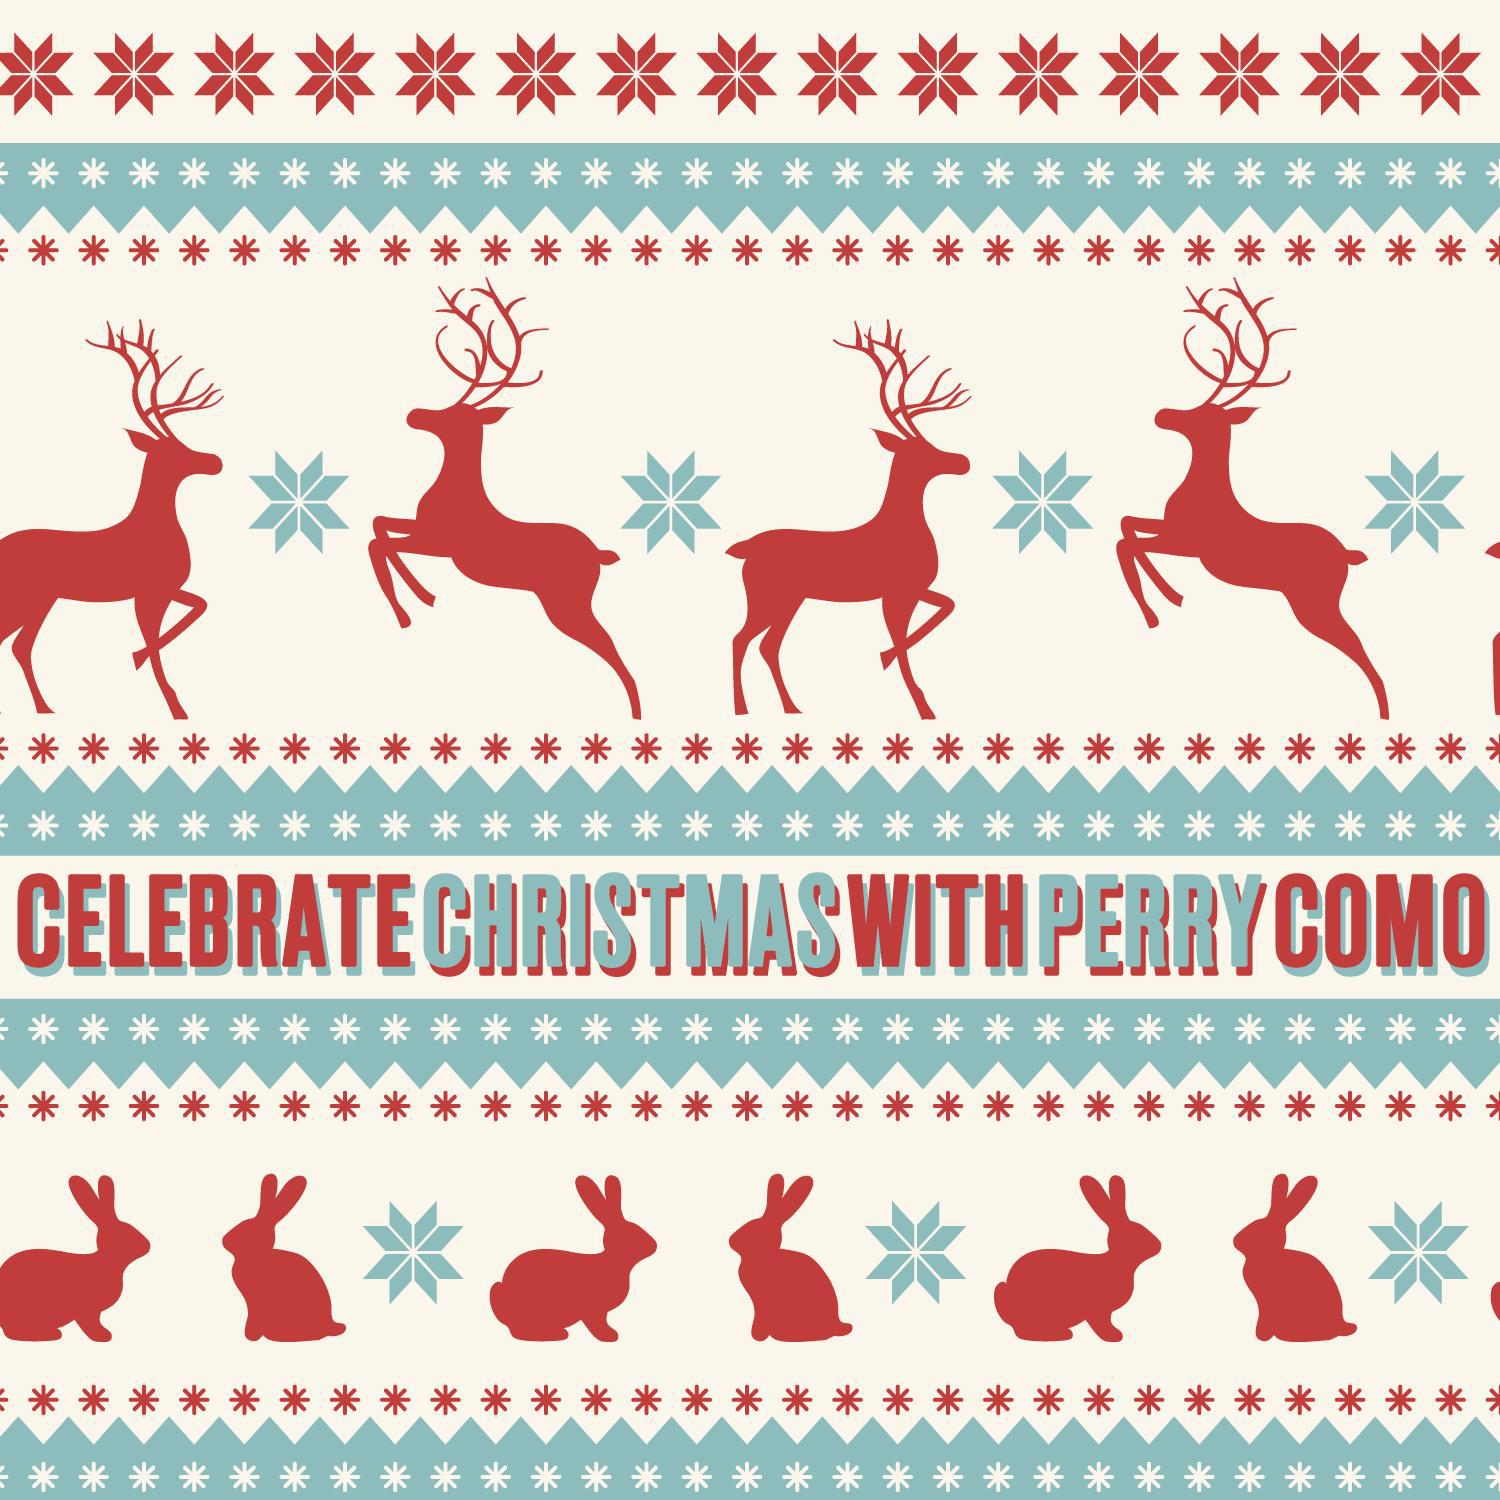 Celebrate Christmas with Perry Como